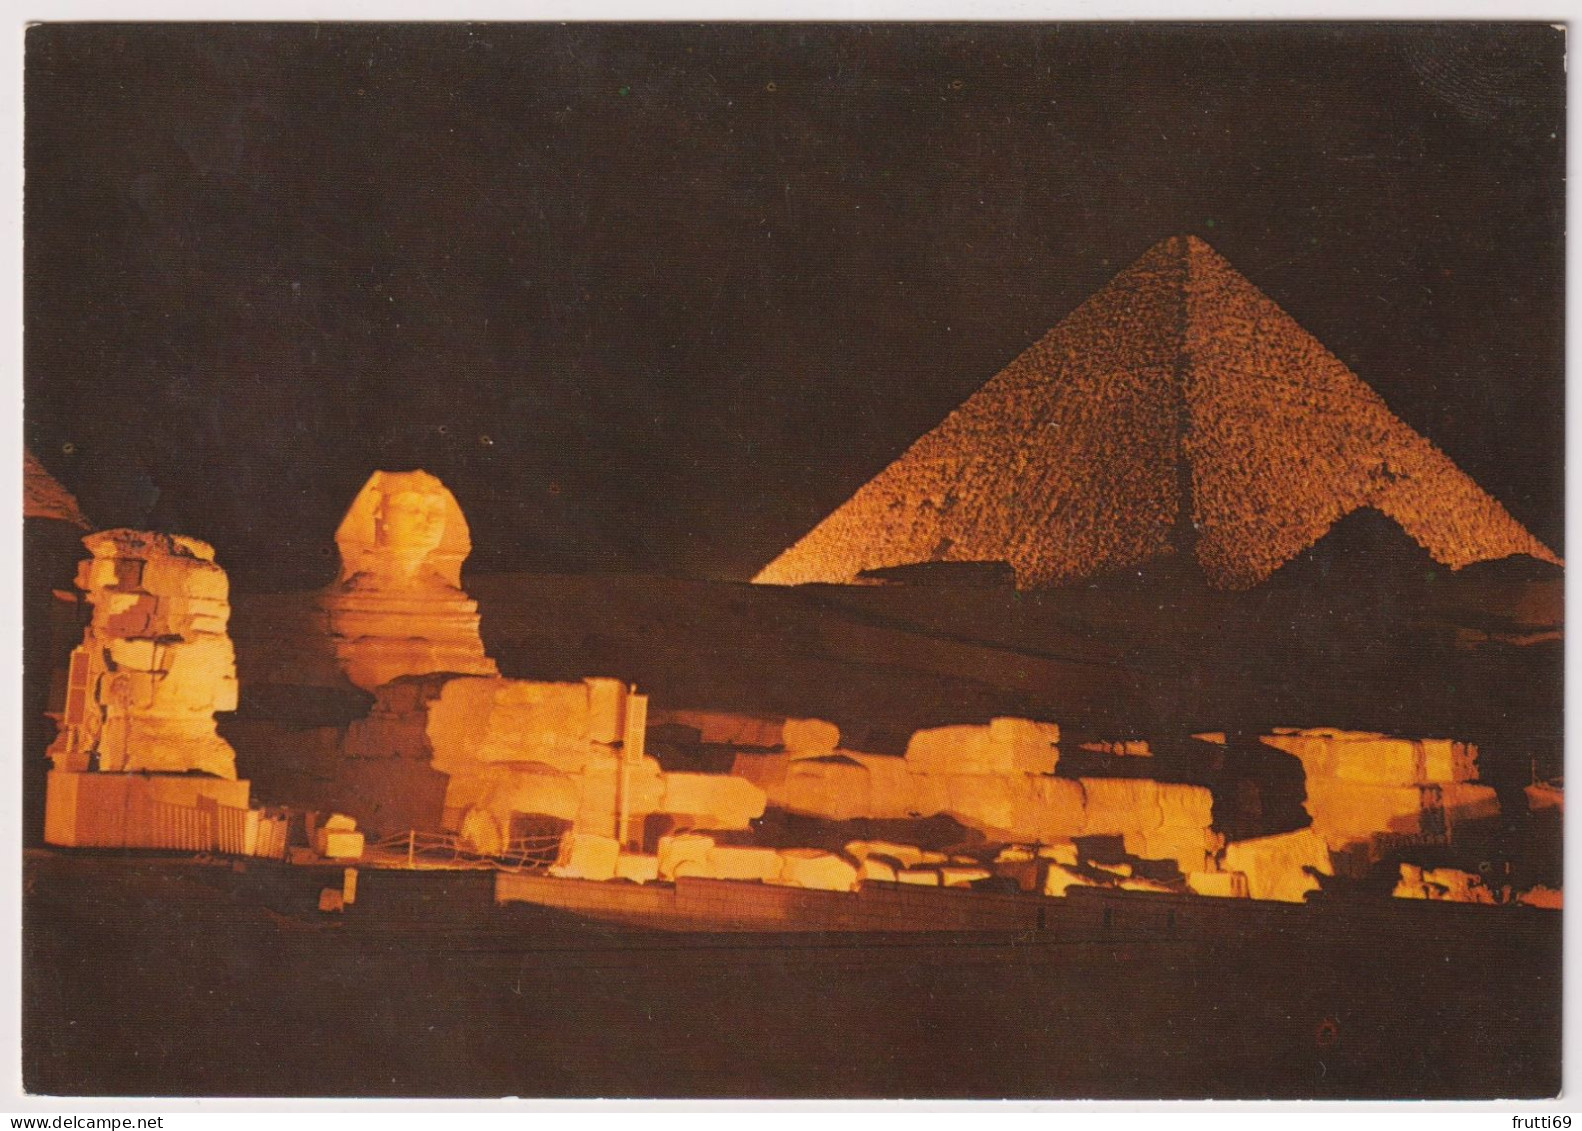 AK 198185 EGYPT - Giza - Sound And Light At The Pyramids Of Giza - Piramiden